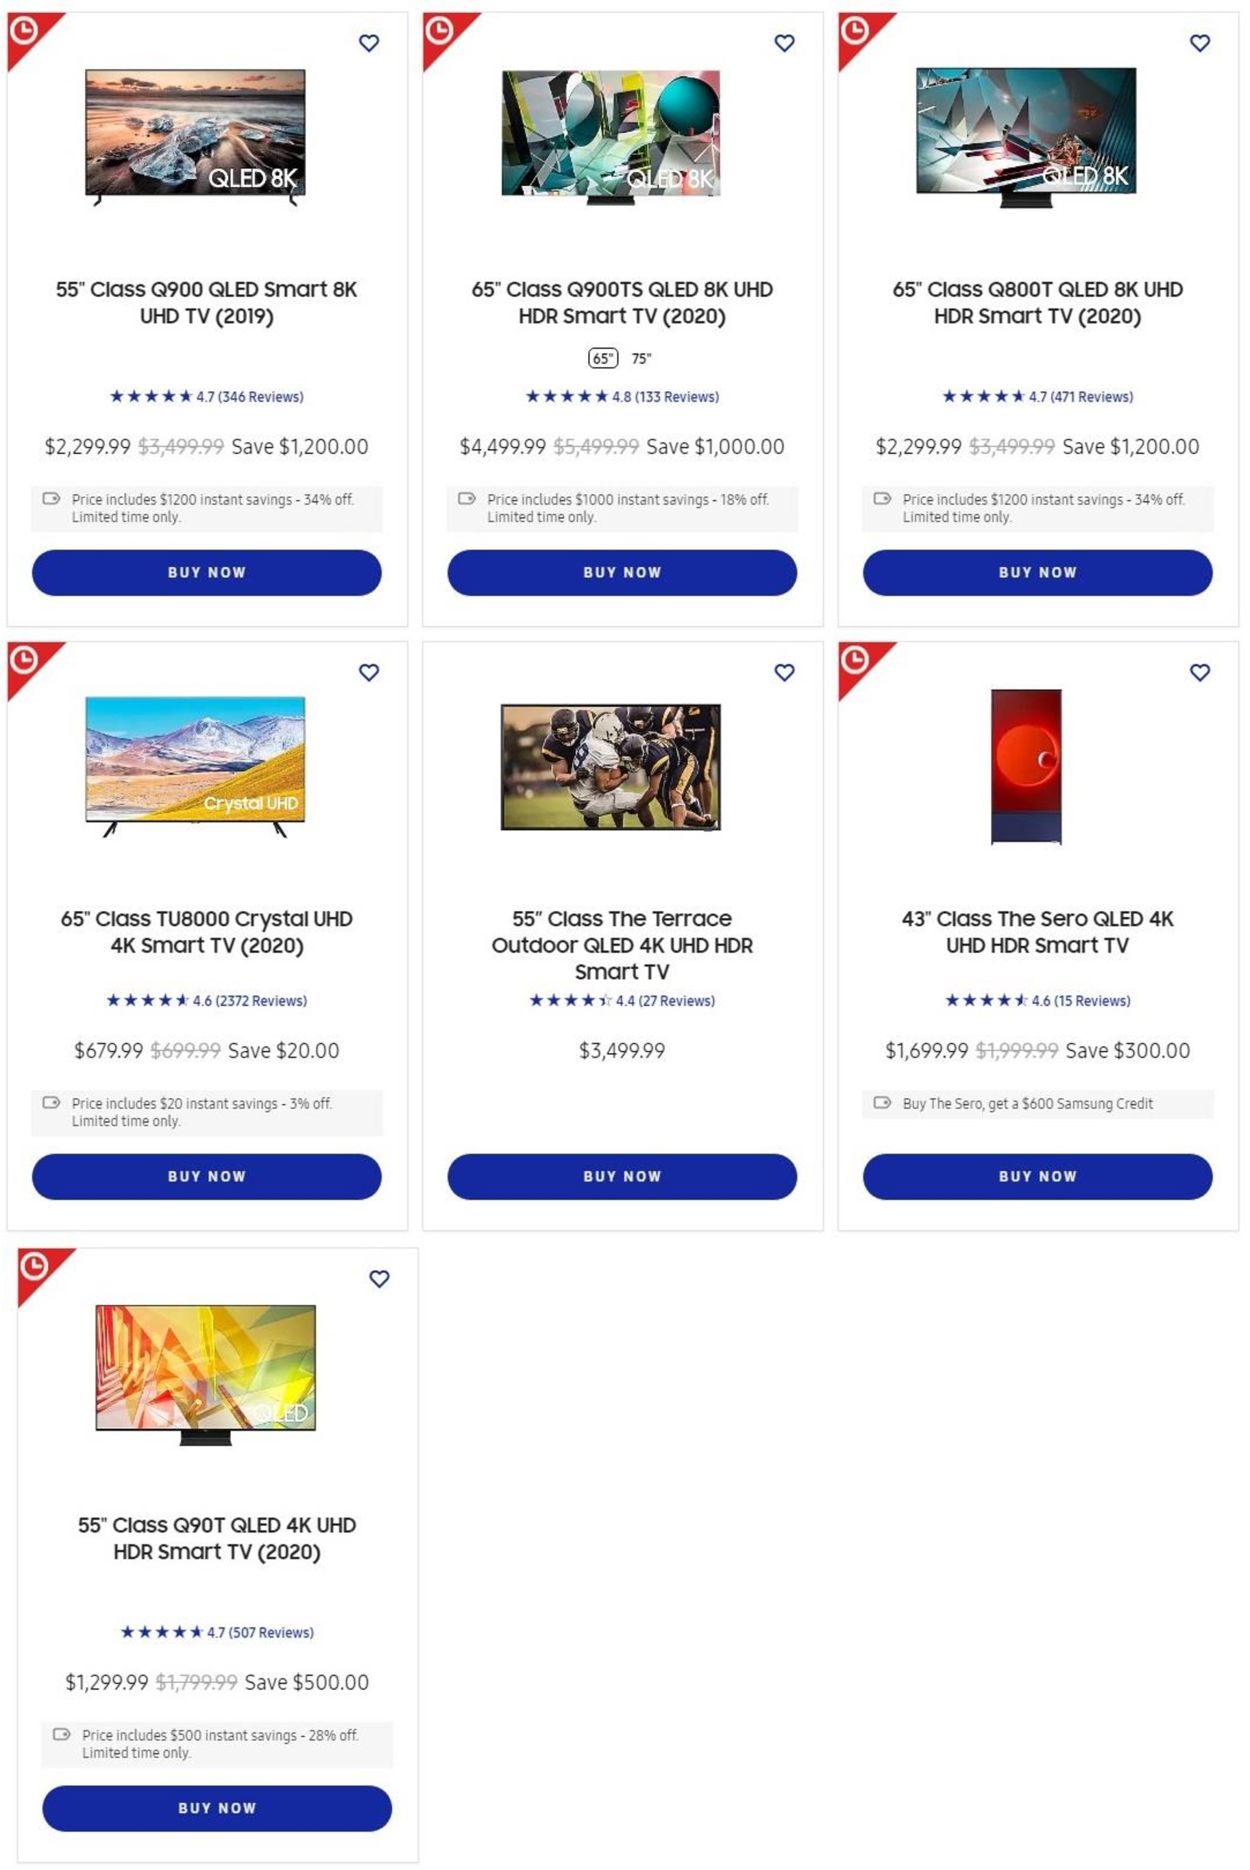 Catalogue Samsung - Black Friday 2020 from 11/21/2020